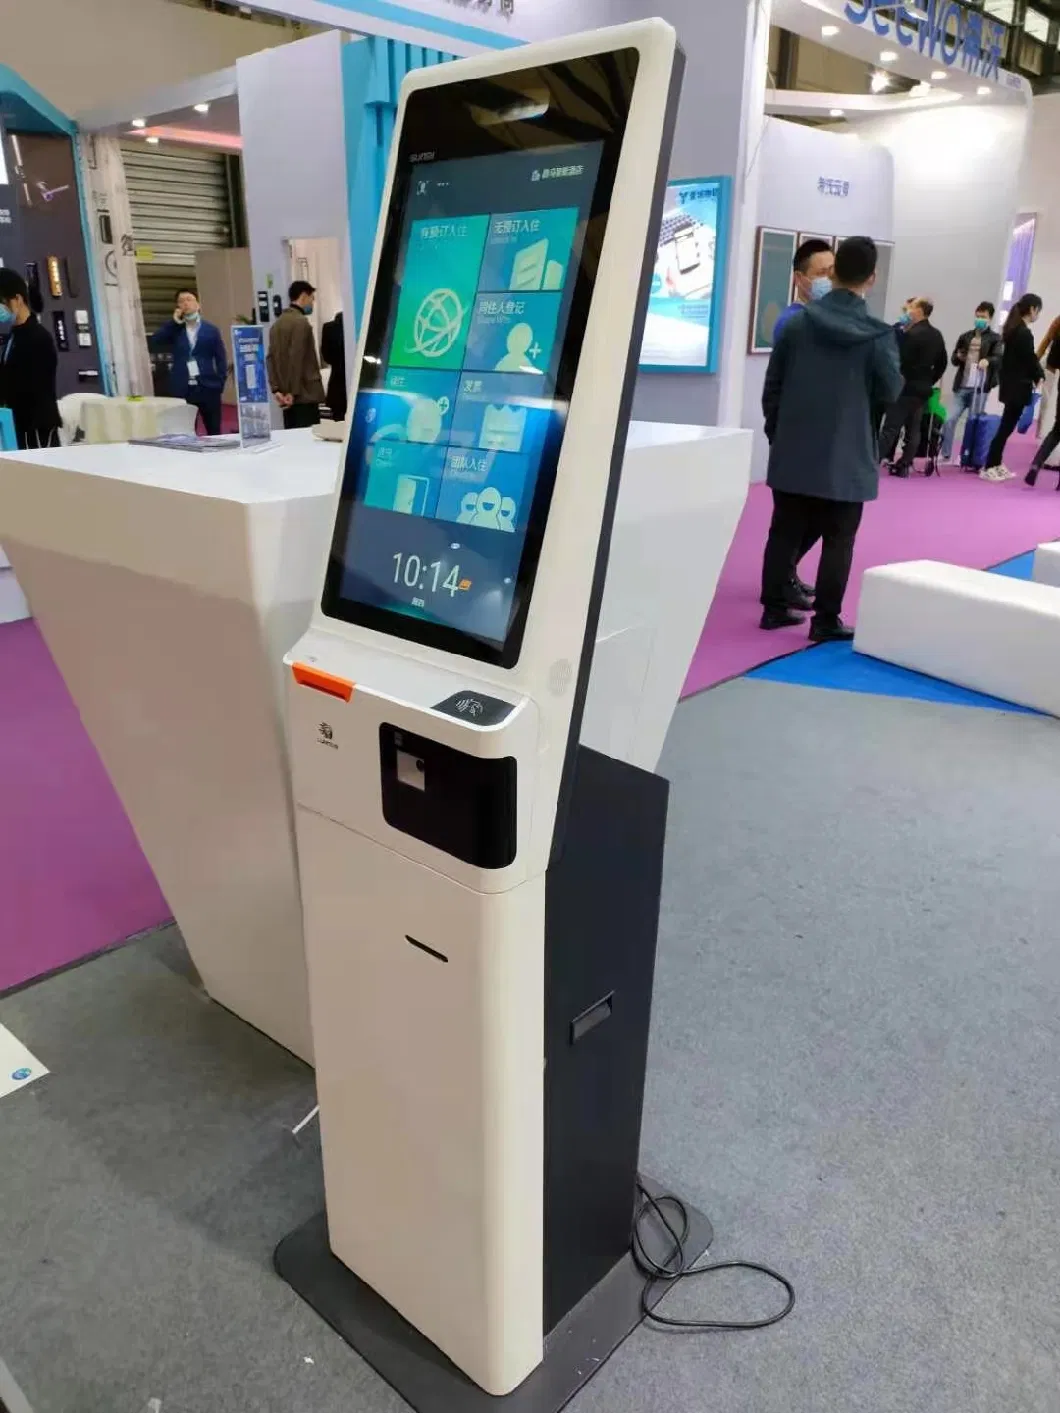 Dual-Touchscreen Windows PC Receipt Printer ID Room Card Reader Dispenser Self Hotel Check in out Terminal Kiosk Machine OEM